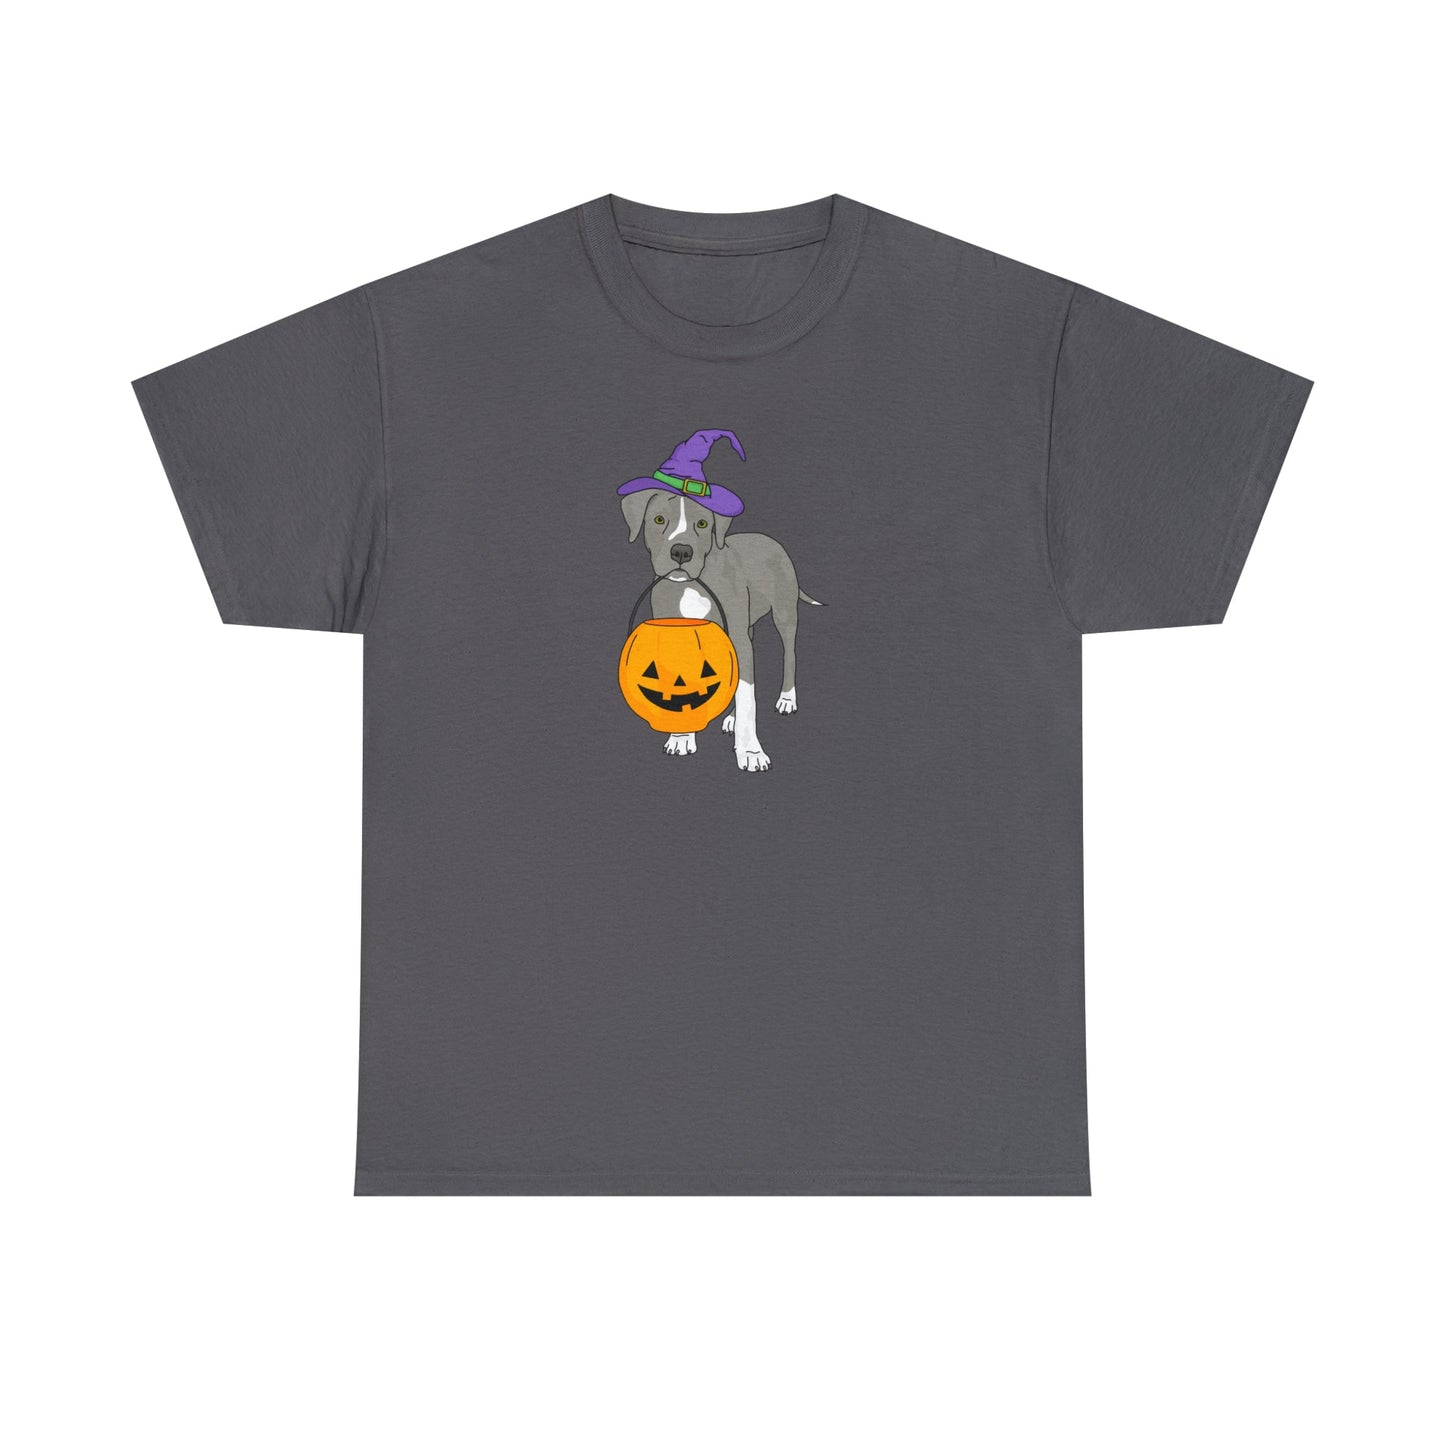 Witchy Puppy | T-shirt - Detezi Designs-13933292414385995552